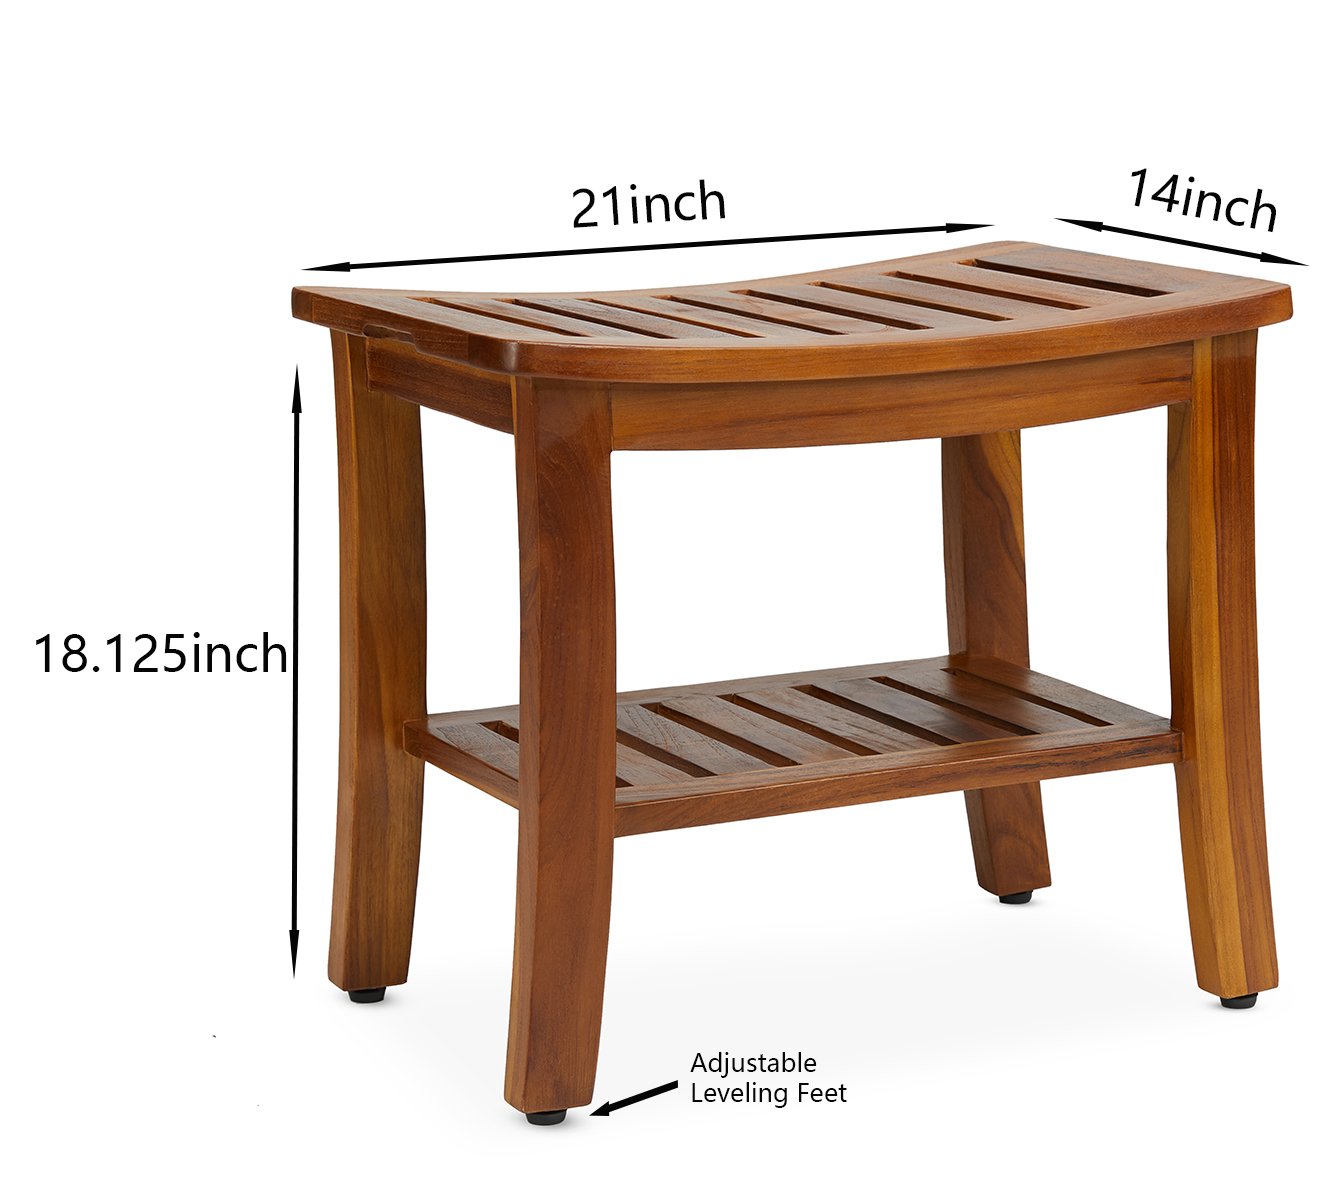 Teak Shower Bench 21 Inch | Handcrafted Teak Wood Shower Bench